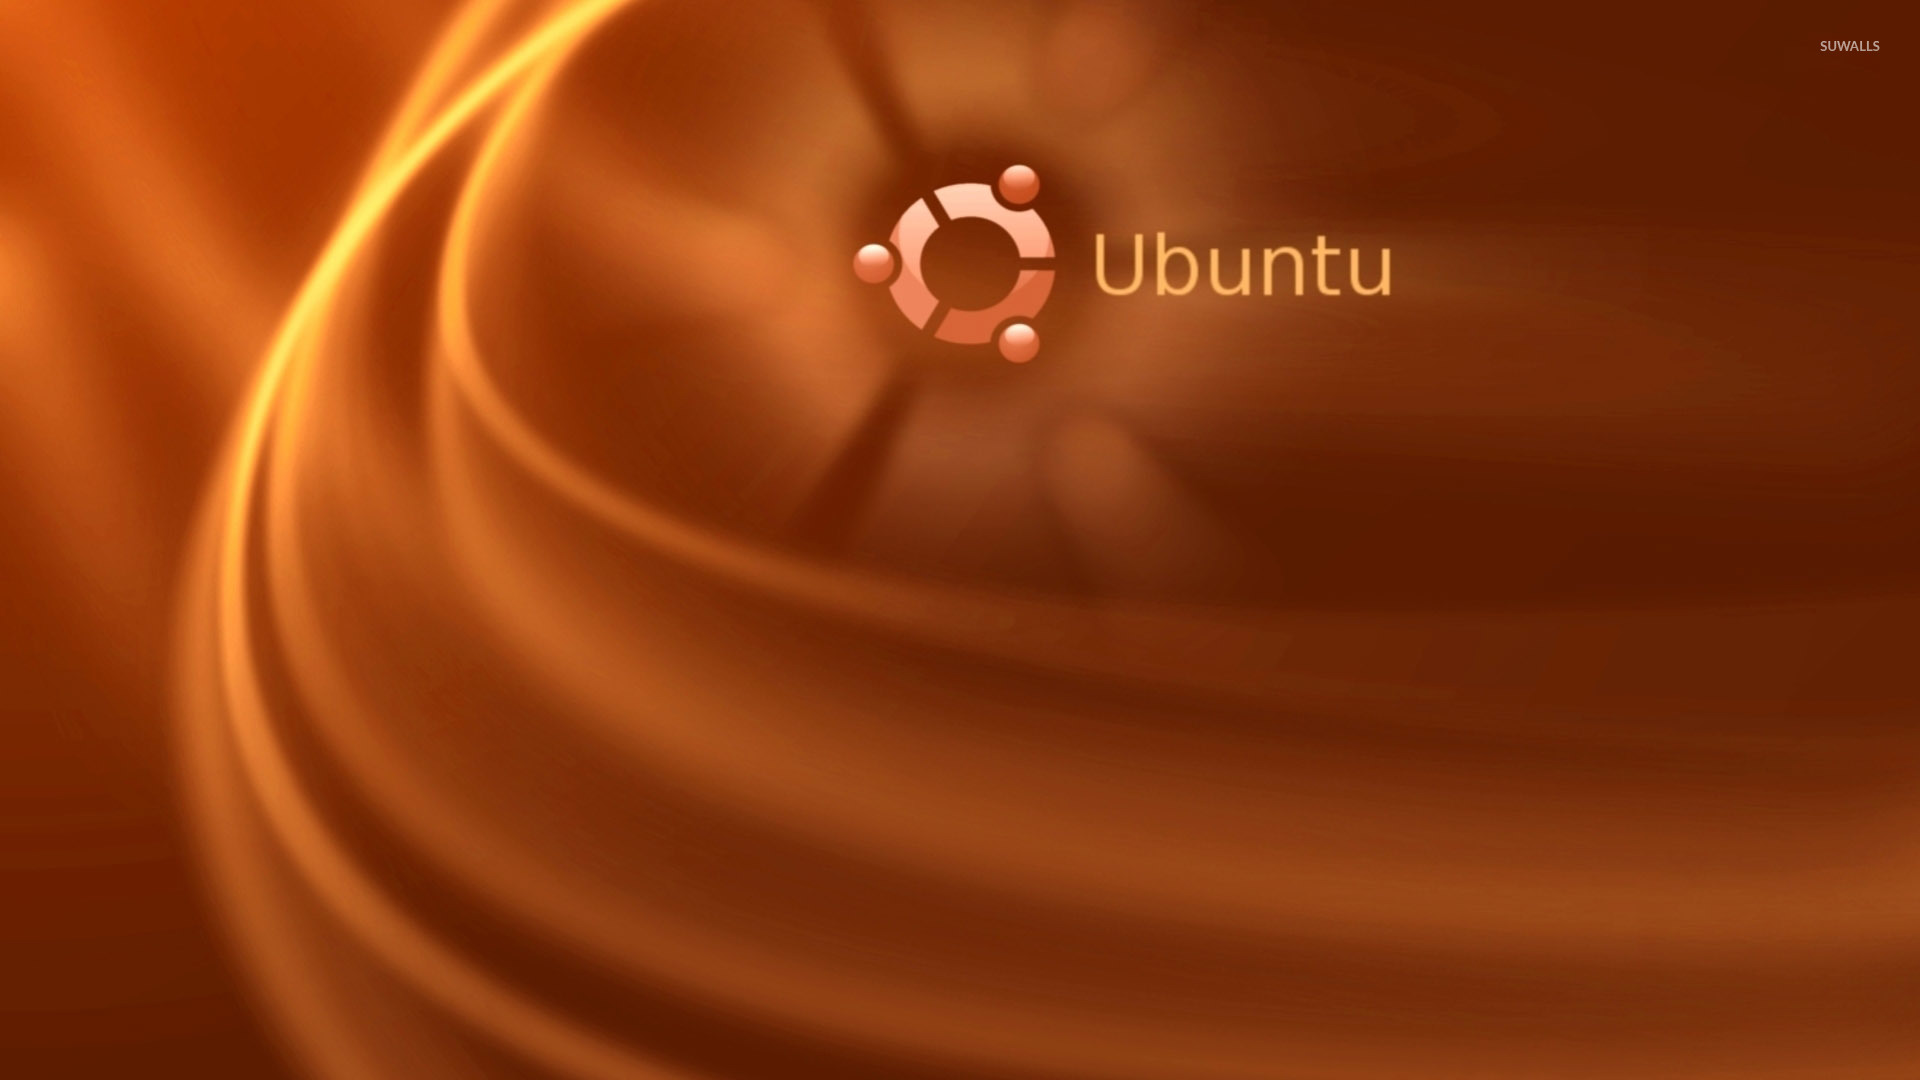 Ubuntu Linux 3 Wallpaper Computer Wallpapers 86